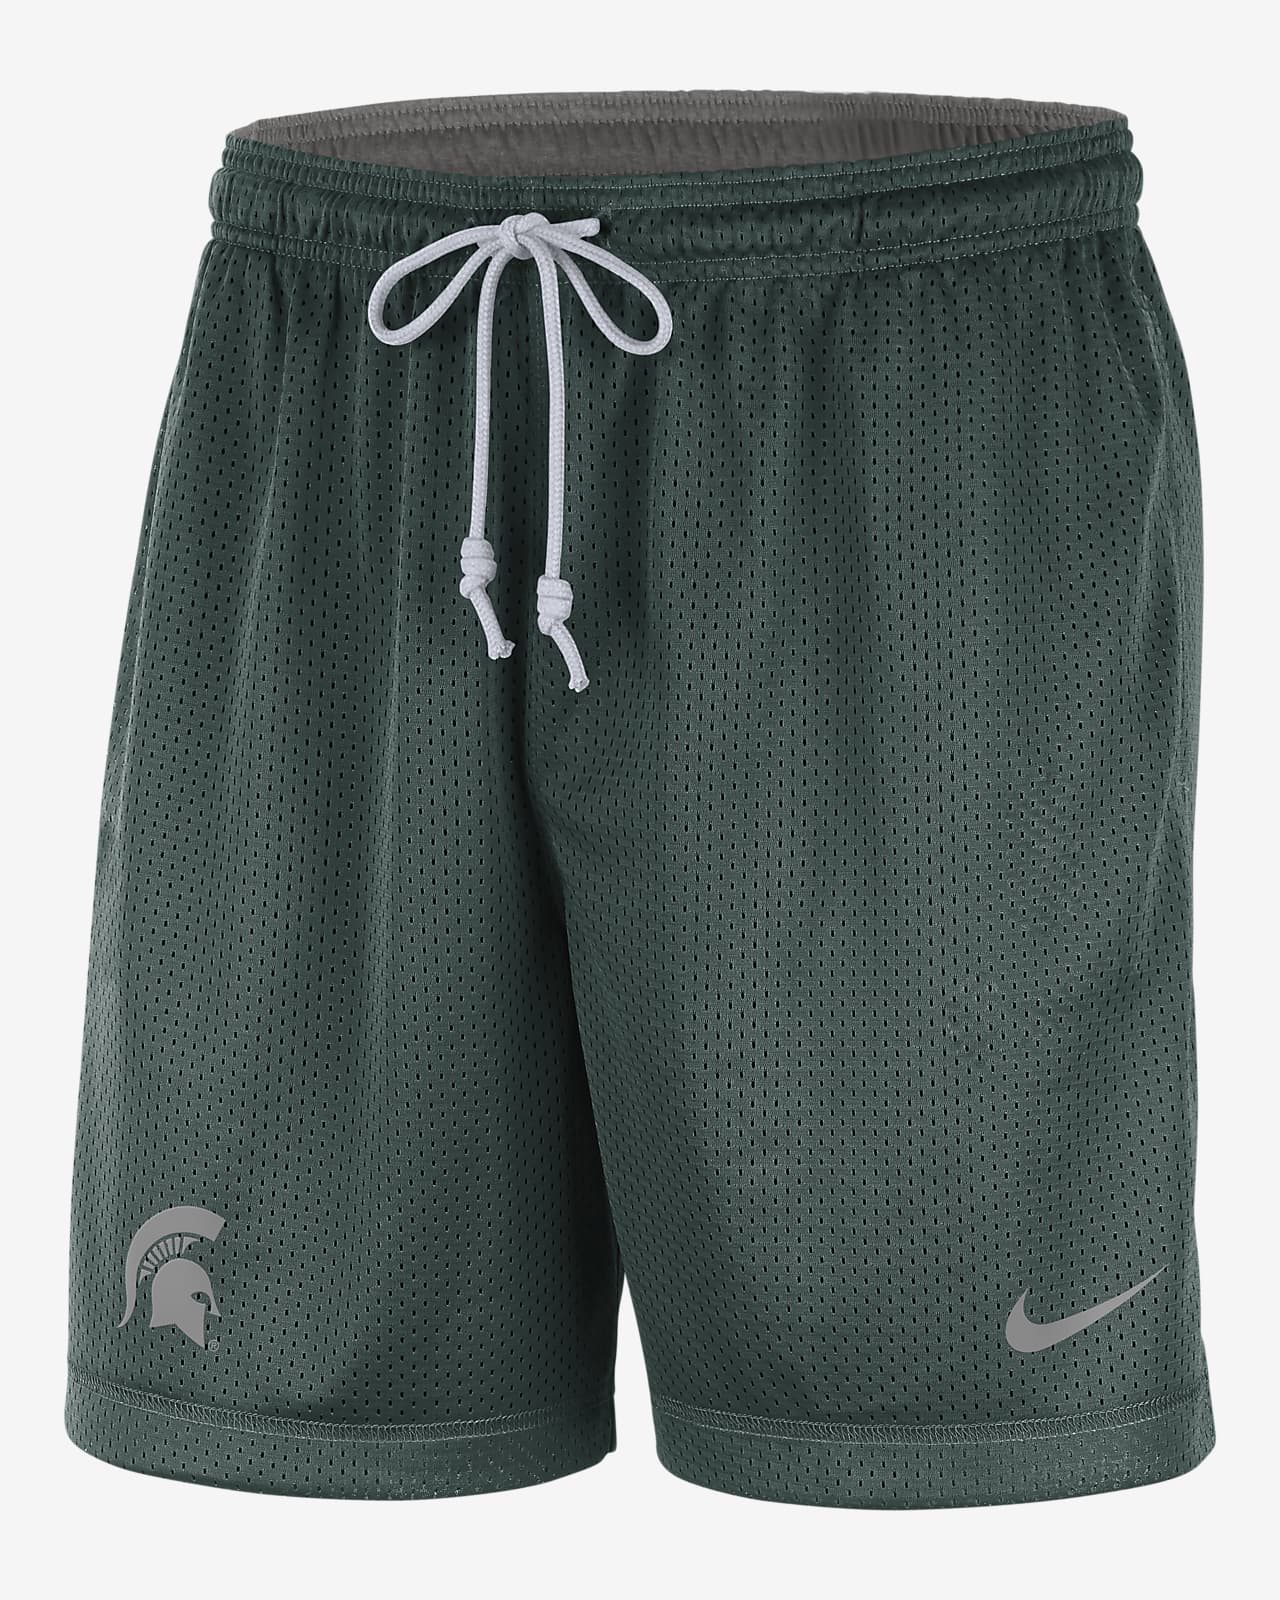 Nike College Dri-FIT (Michigan State) Men's Reversible Shorts